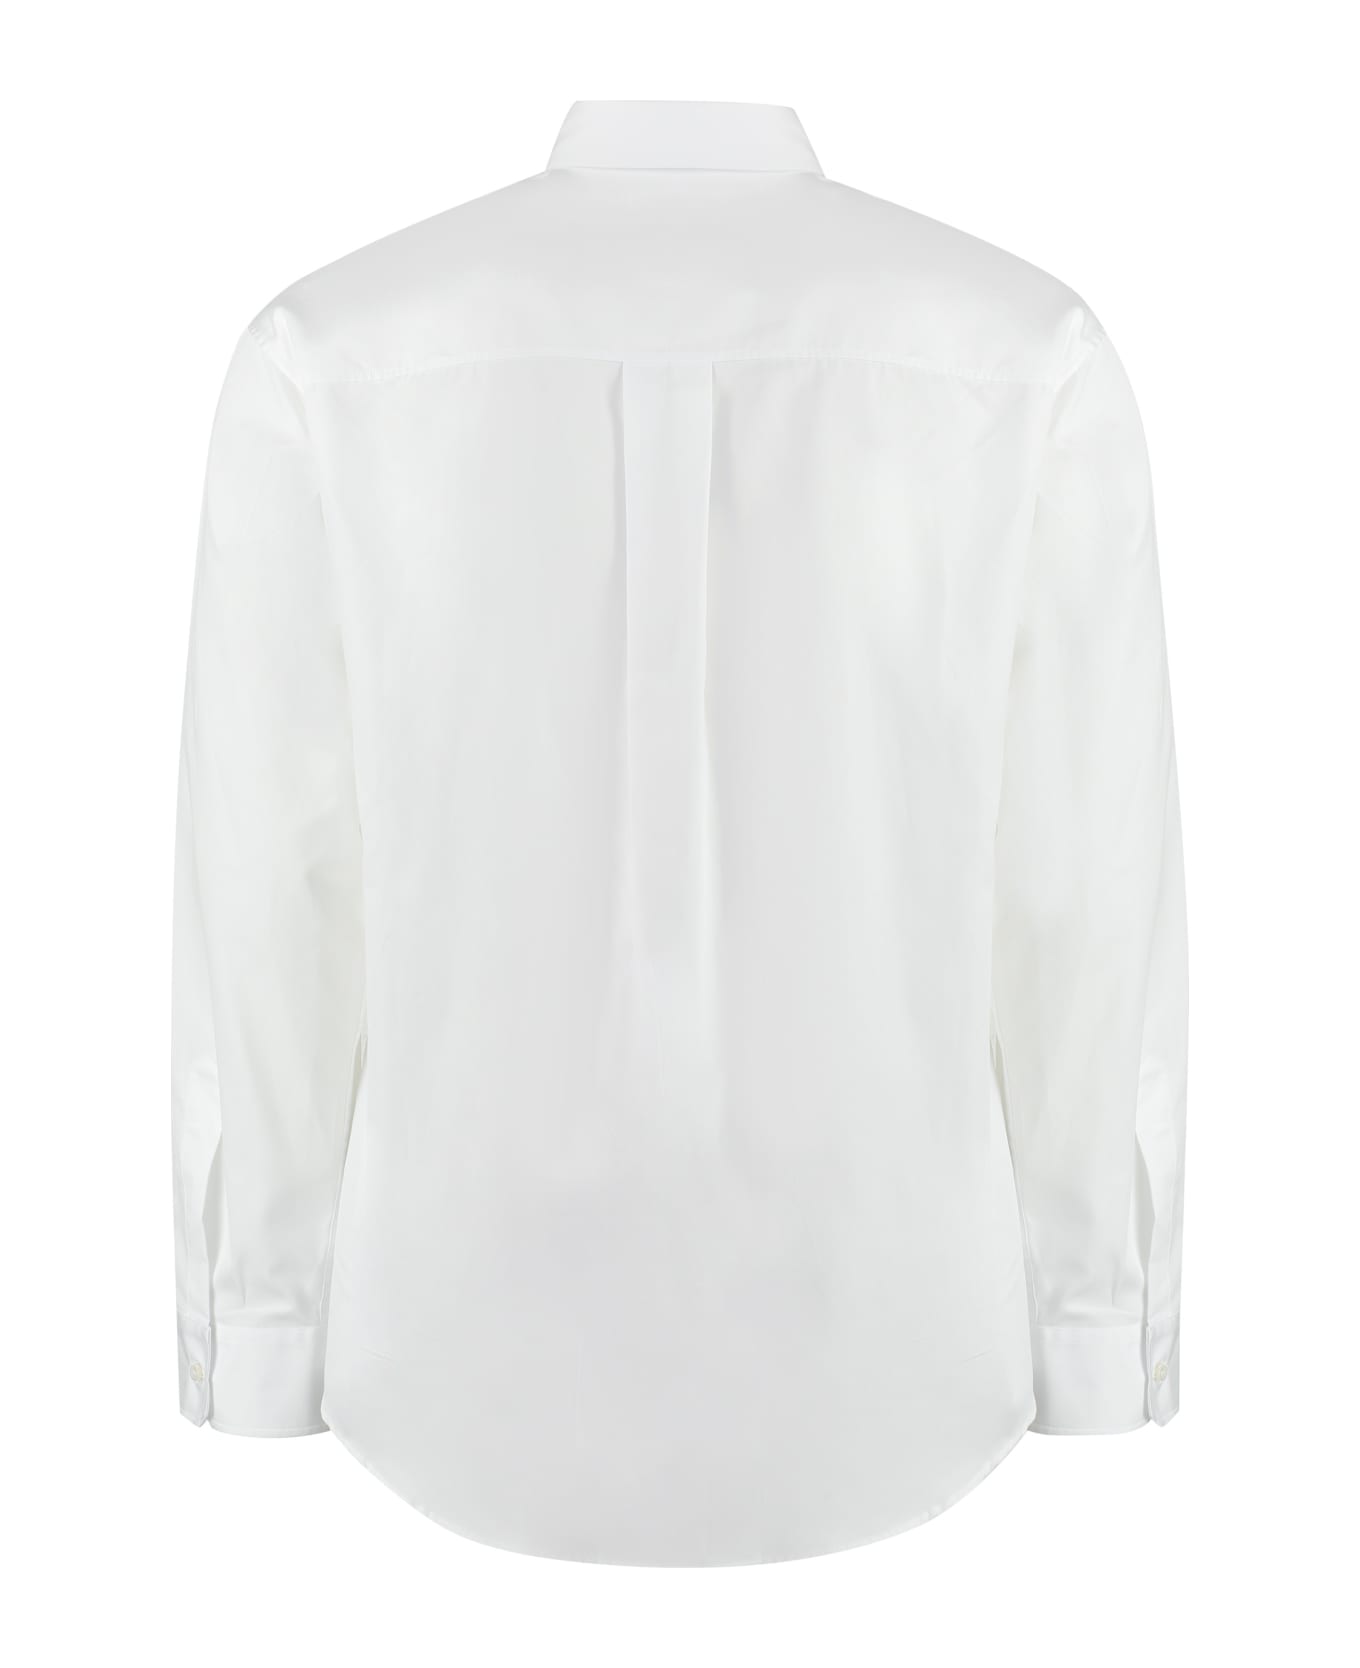 Dsquared2 Drop Cotton Shirt - White